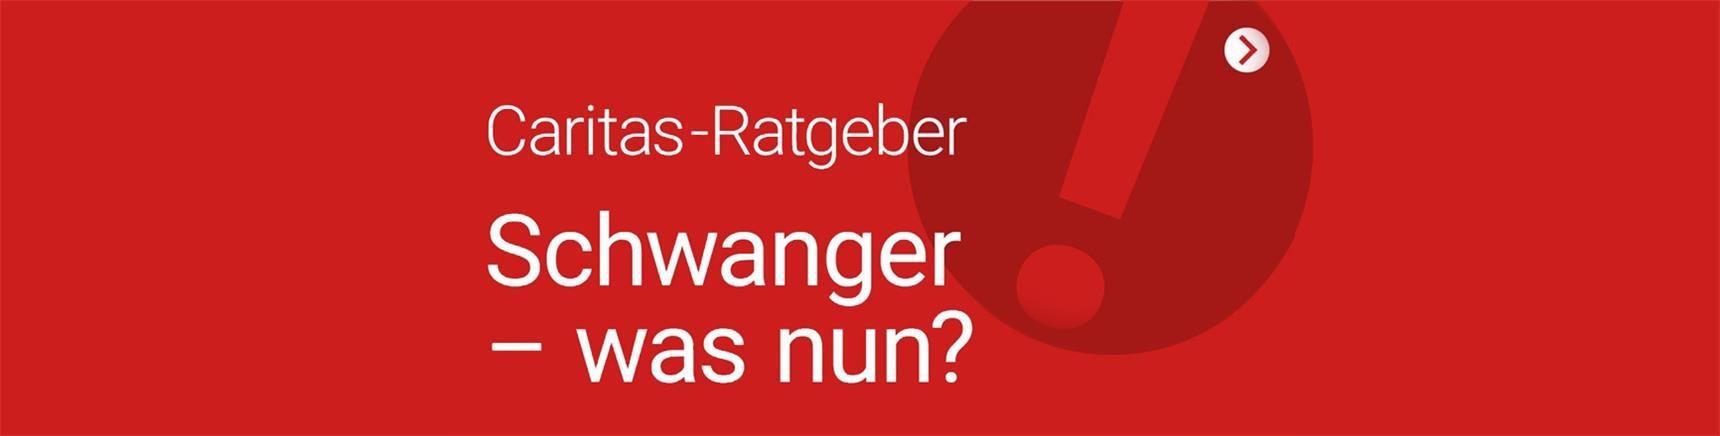 Schwanger-was nun?